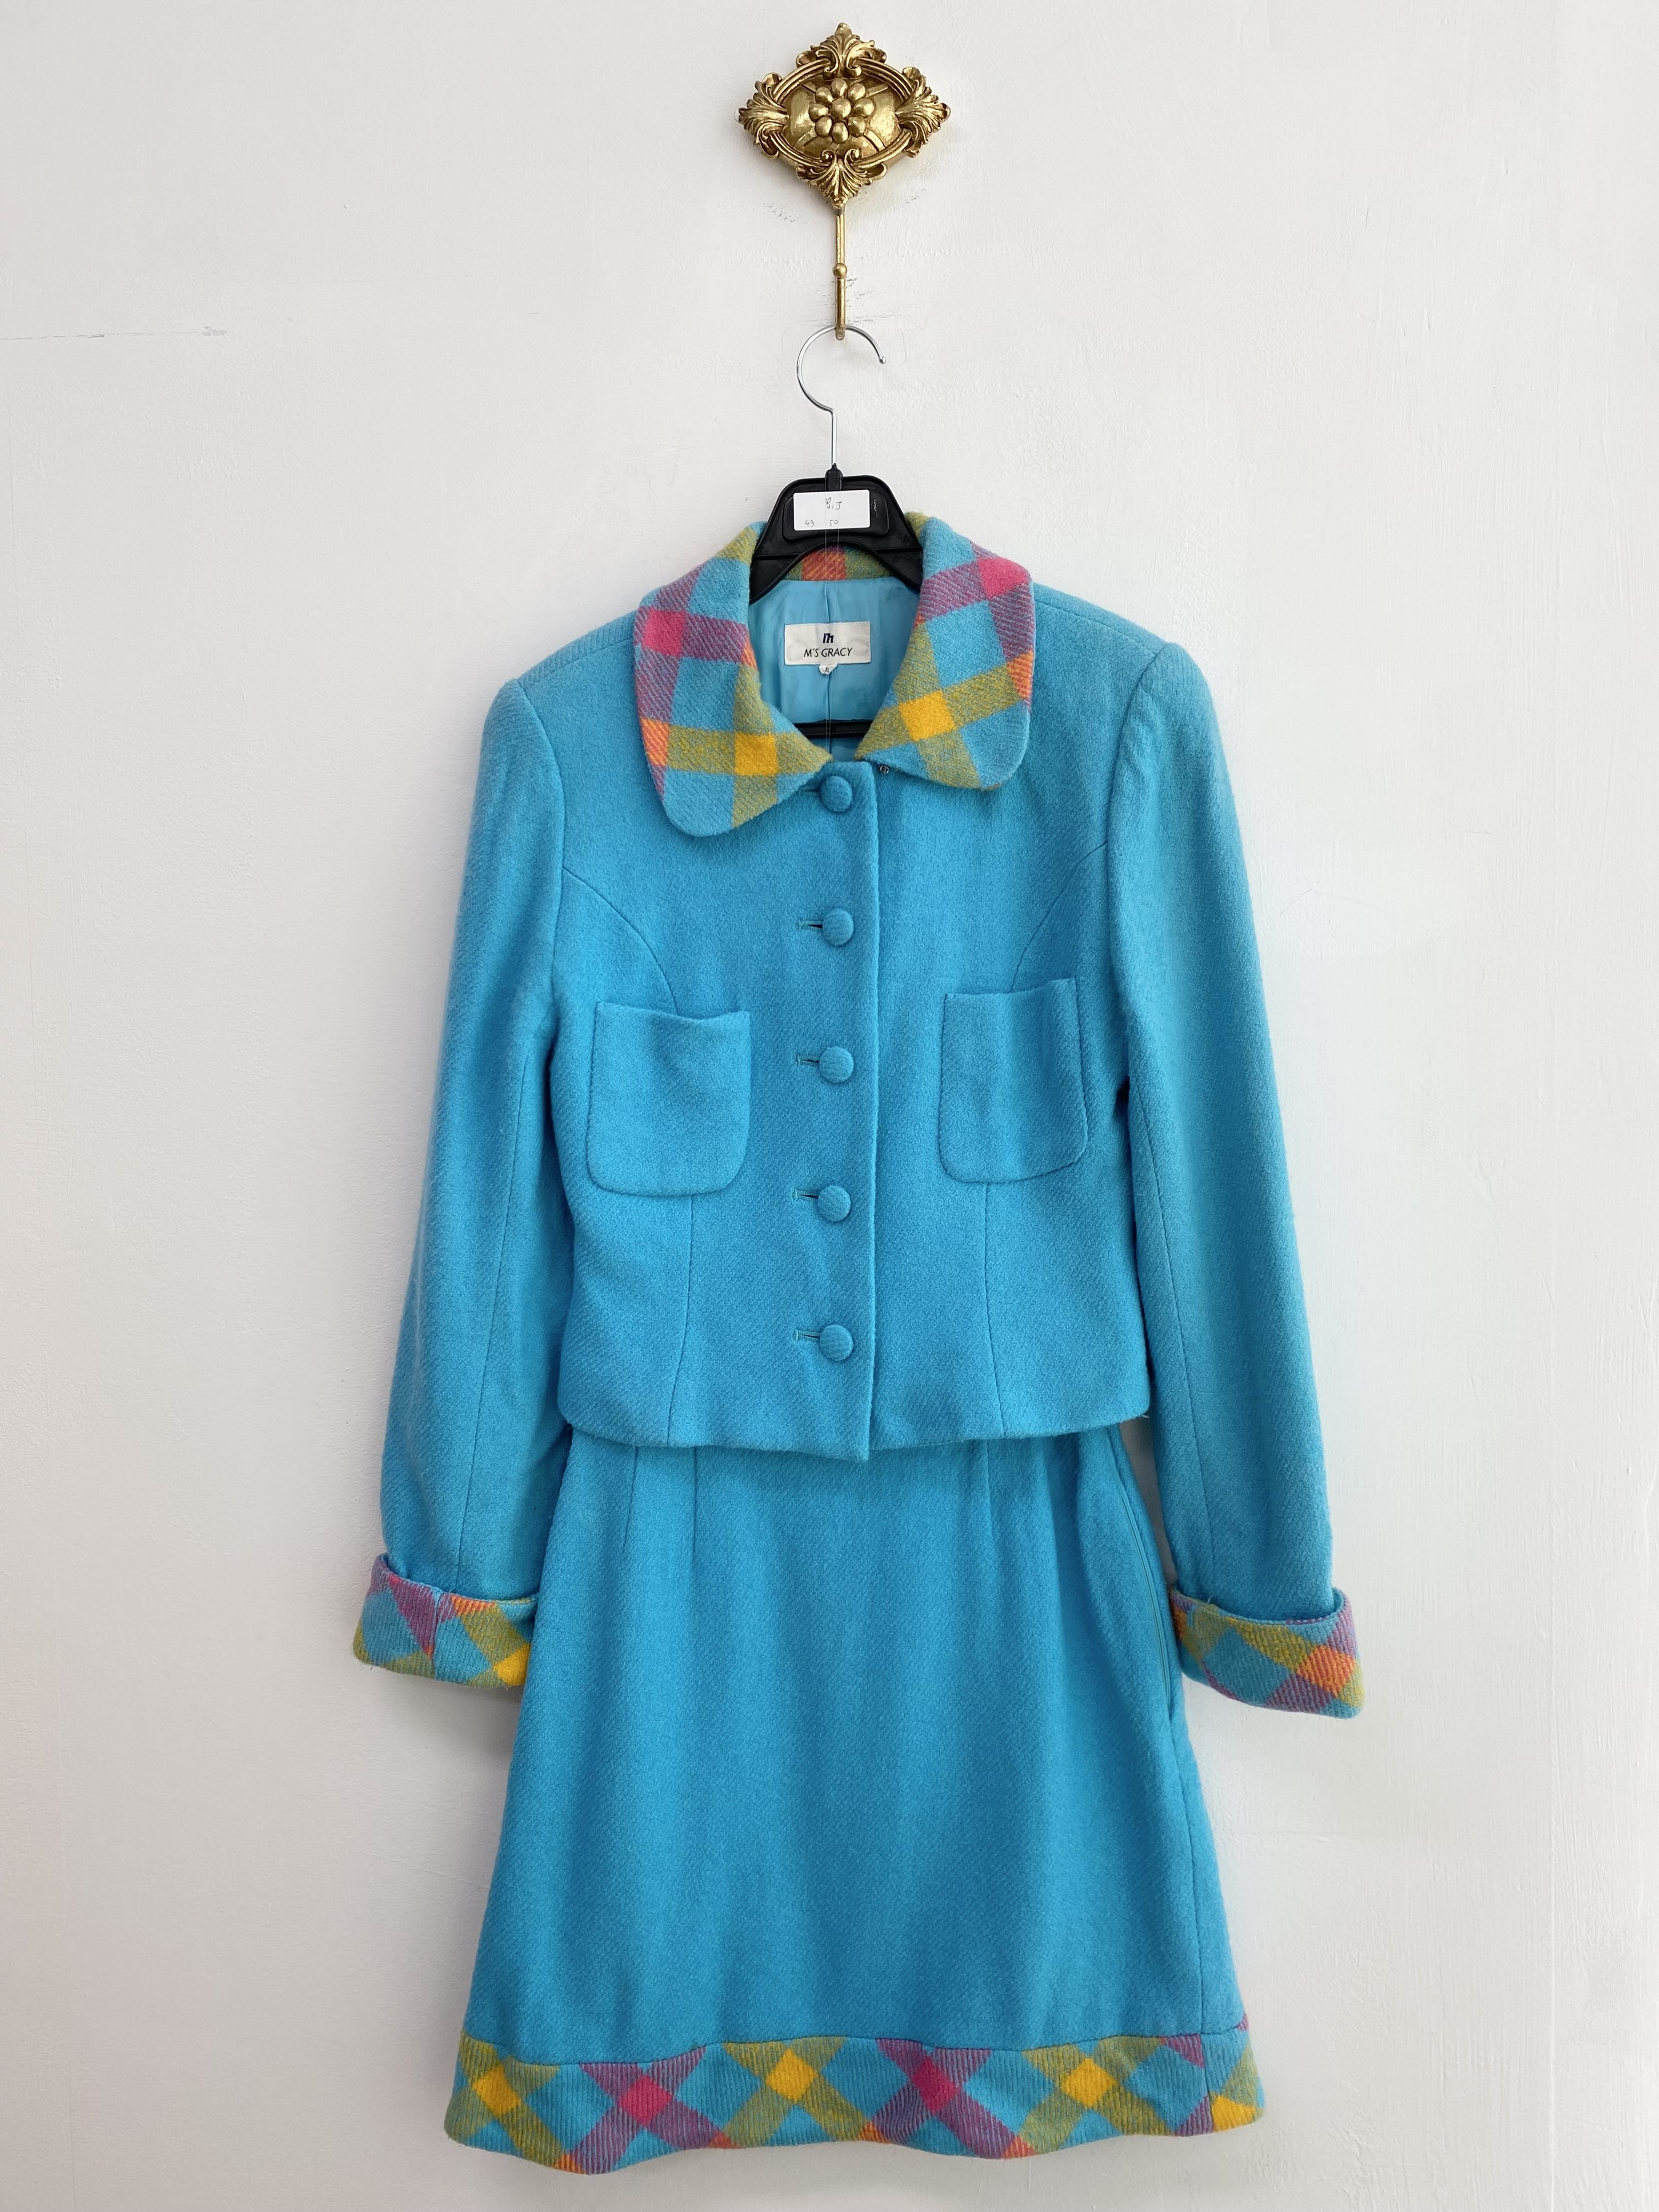 Aqua blue colorful check point wool jacket skirt setup